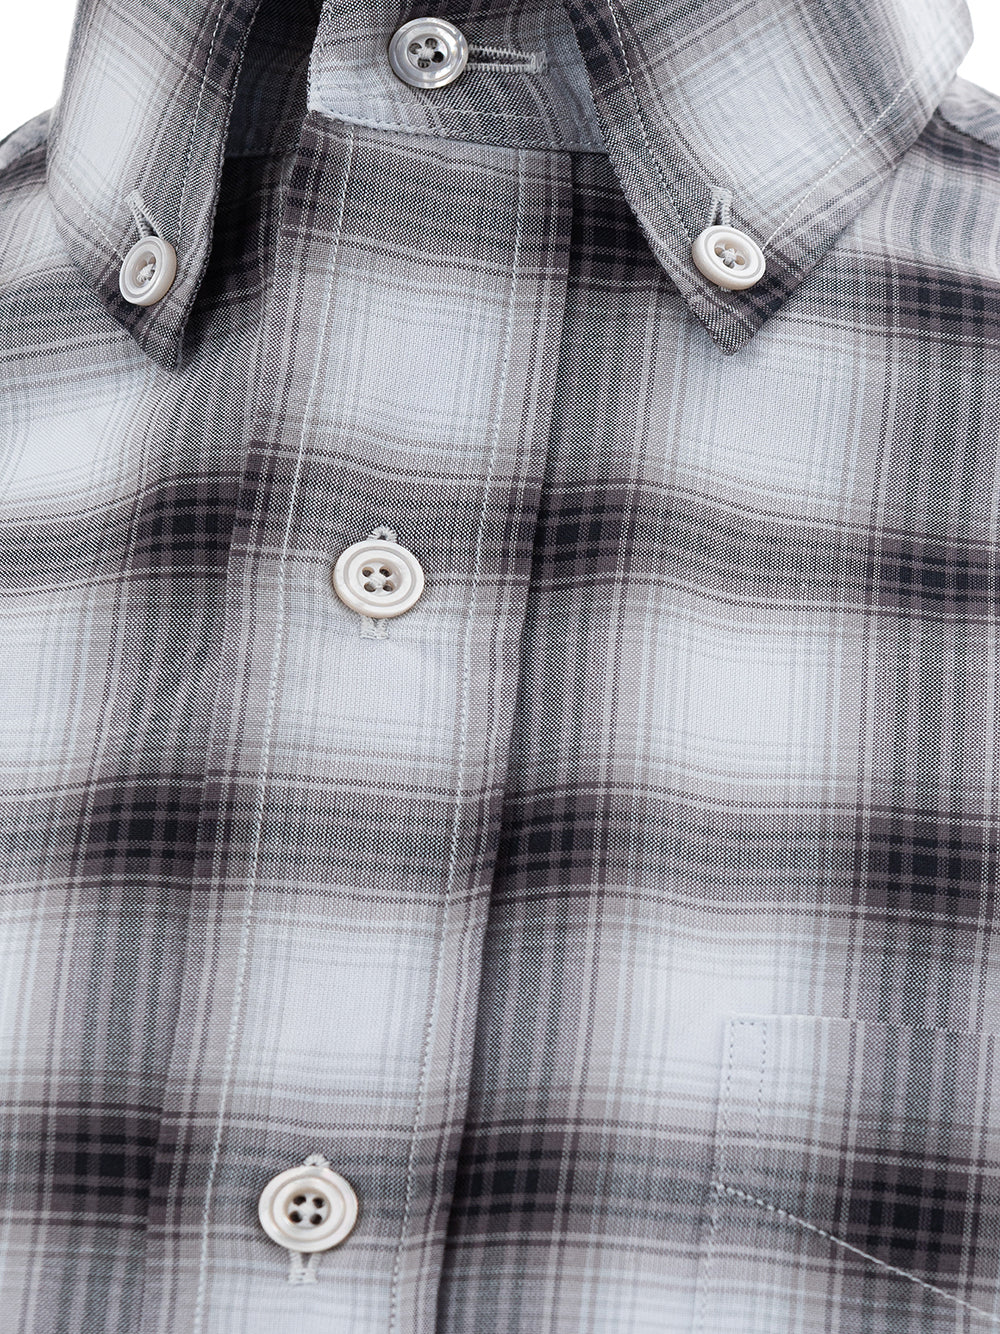 Tom Ford Checkered Gray Cotton Shirt